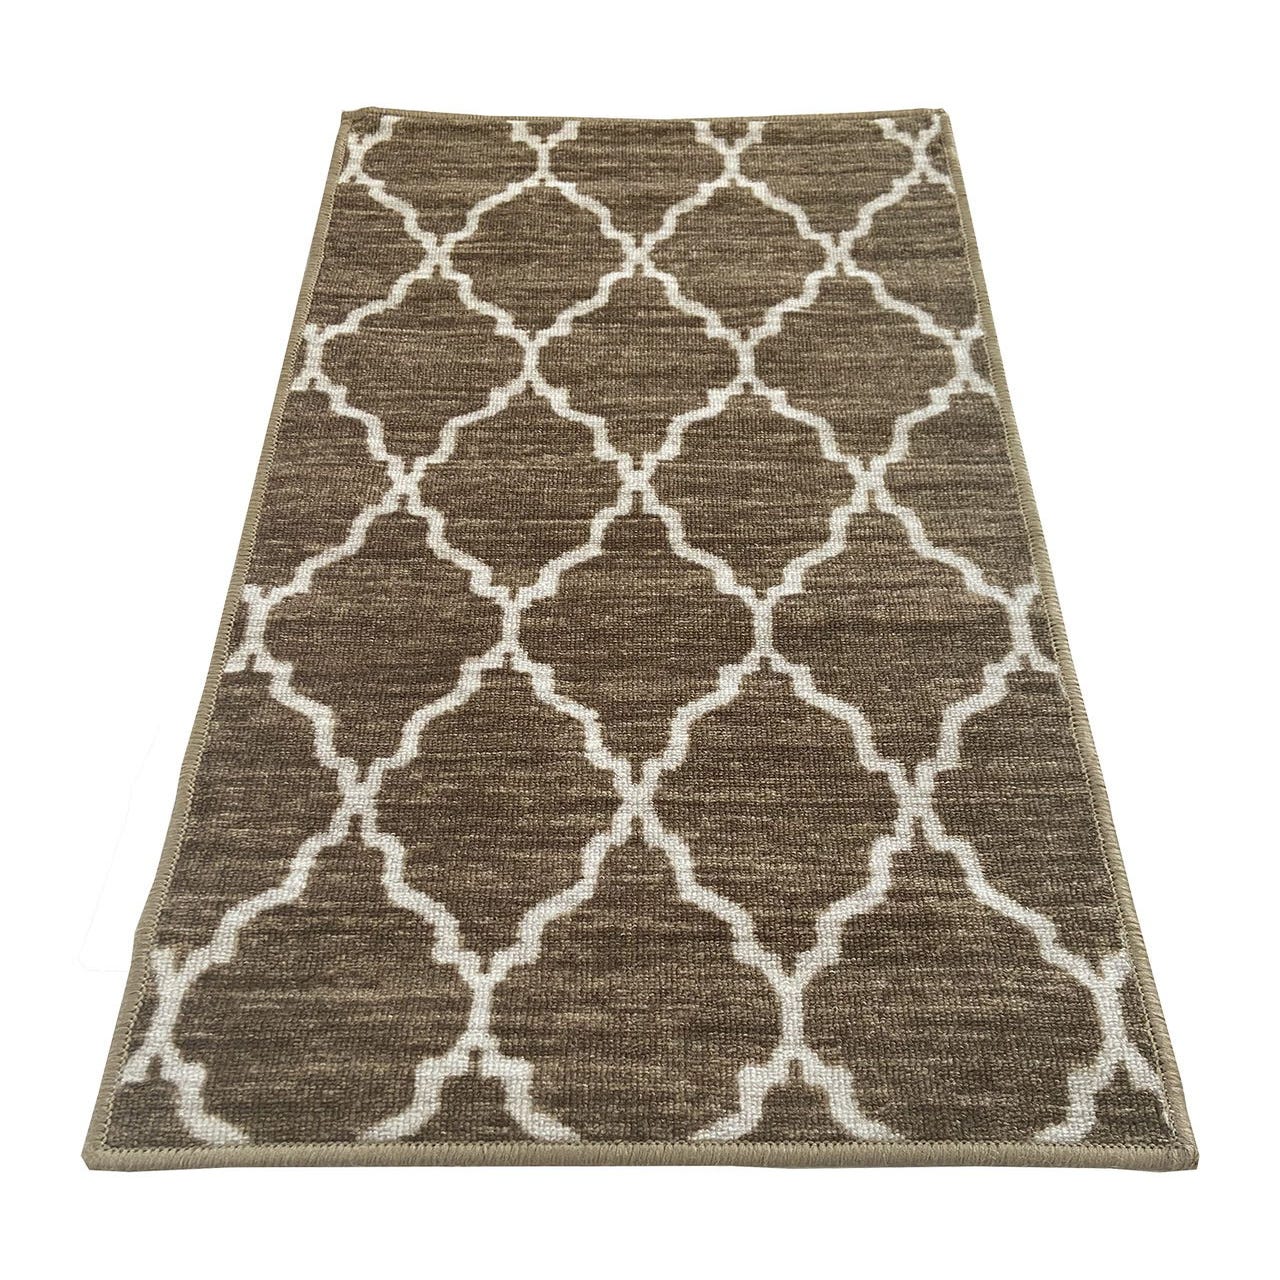 Cómo elegir la alfombra perfecta para el pasillo - Foto 1